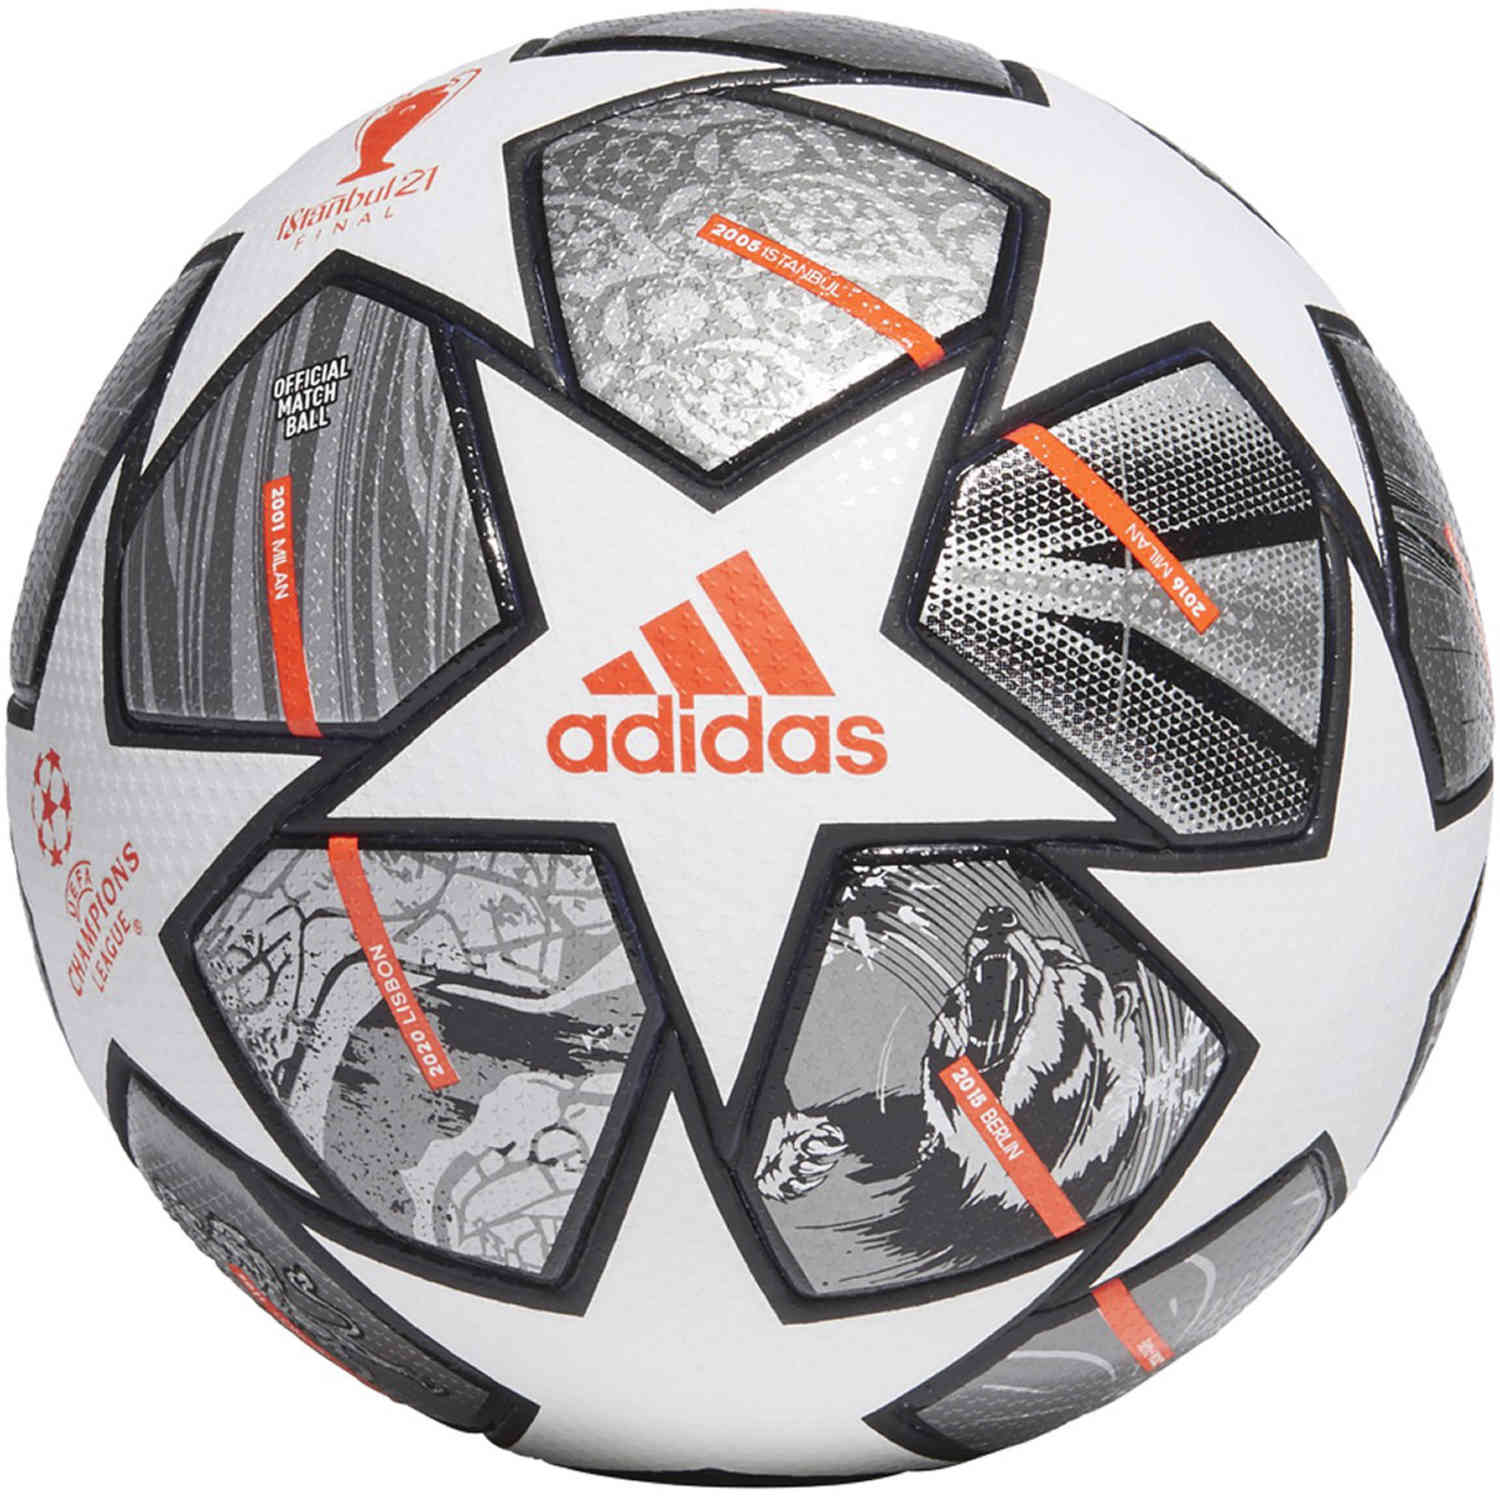 Finale Pro Official Match Soccer Ball - 2020/21 SoccerPro